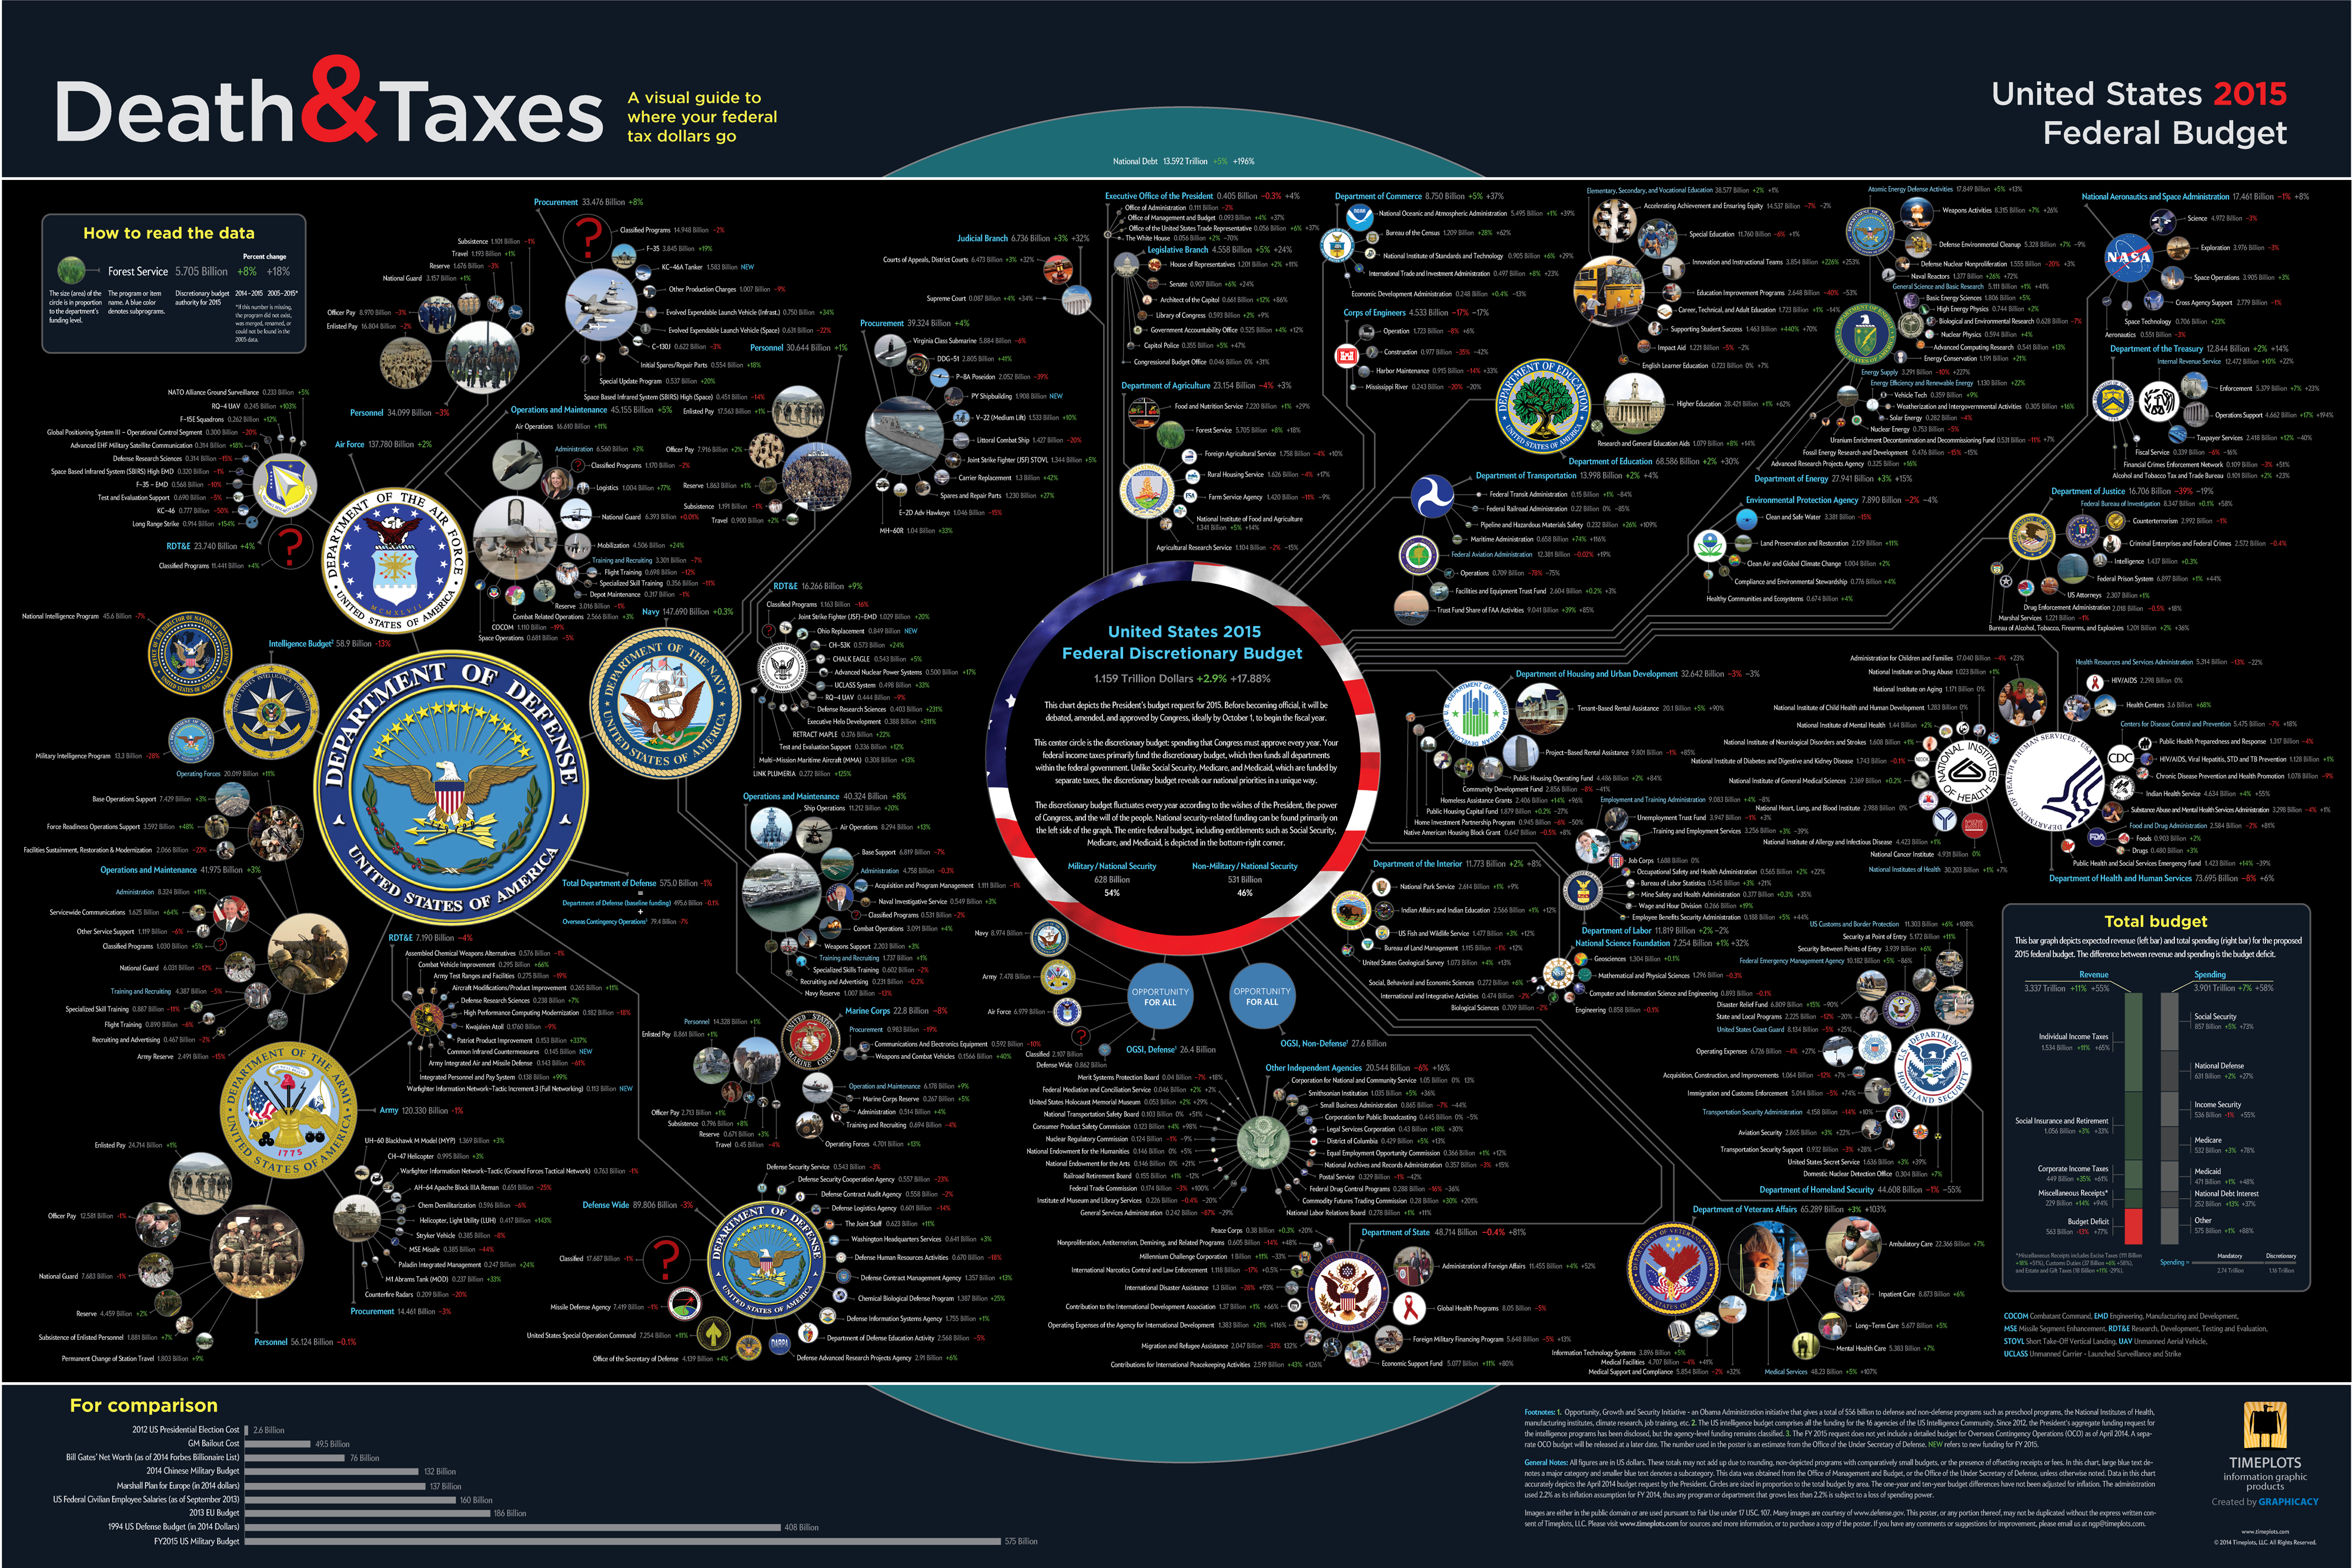 Death and Taxes 2015